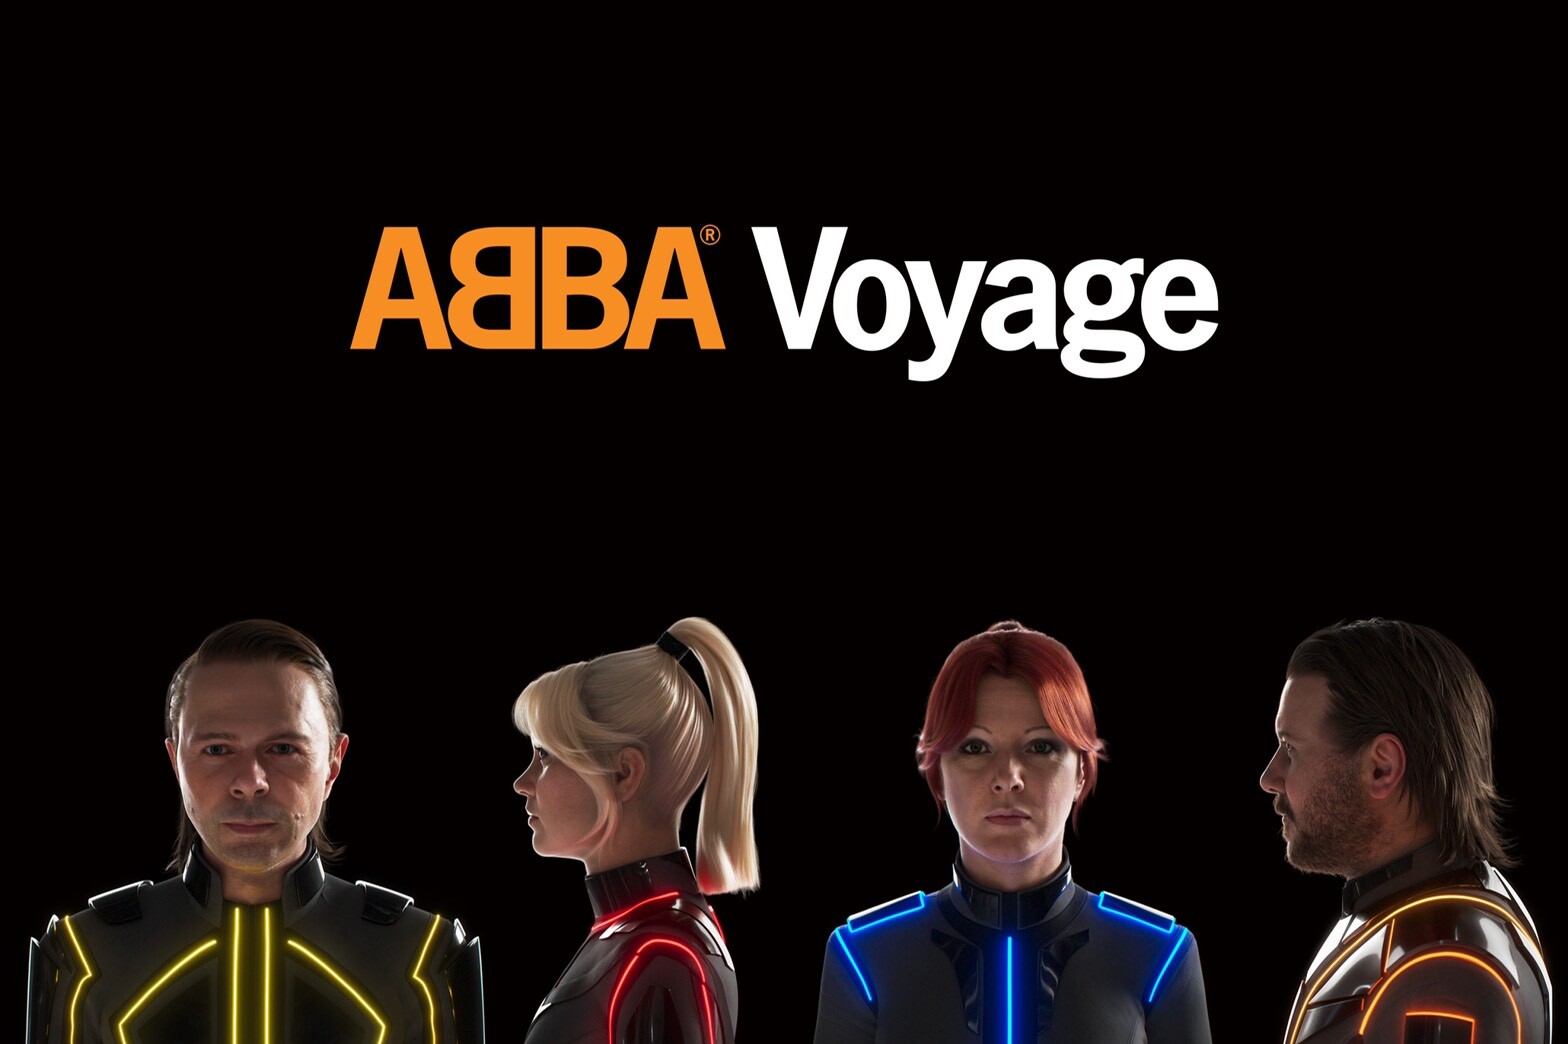 "ABBA" กลับมาแล้ว! Agnetha, Bjoern, Benny and Anni-Frid พร้อมกับ "ABBA VOYAGE" คอนเสิร์ตปฏิวัติวงการ ใช้เวลากว่า 40 ปีในการสร้าง และสตูดิโออัลบั้มใหม่ล่าสุด "Voyage"